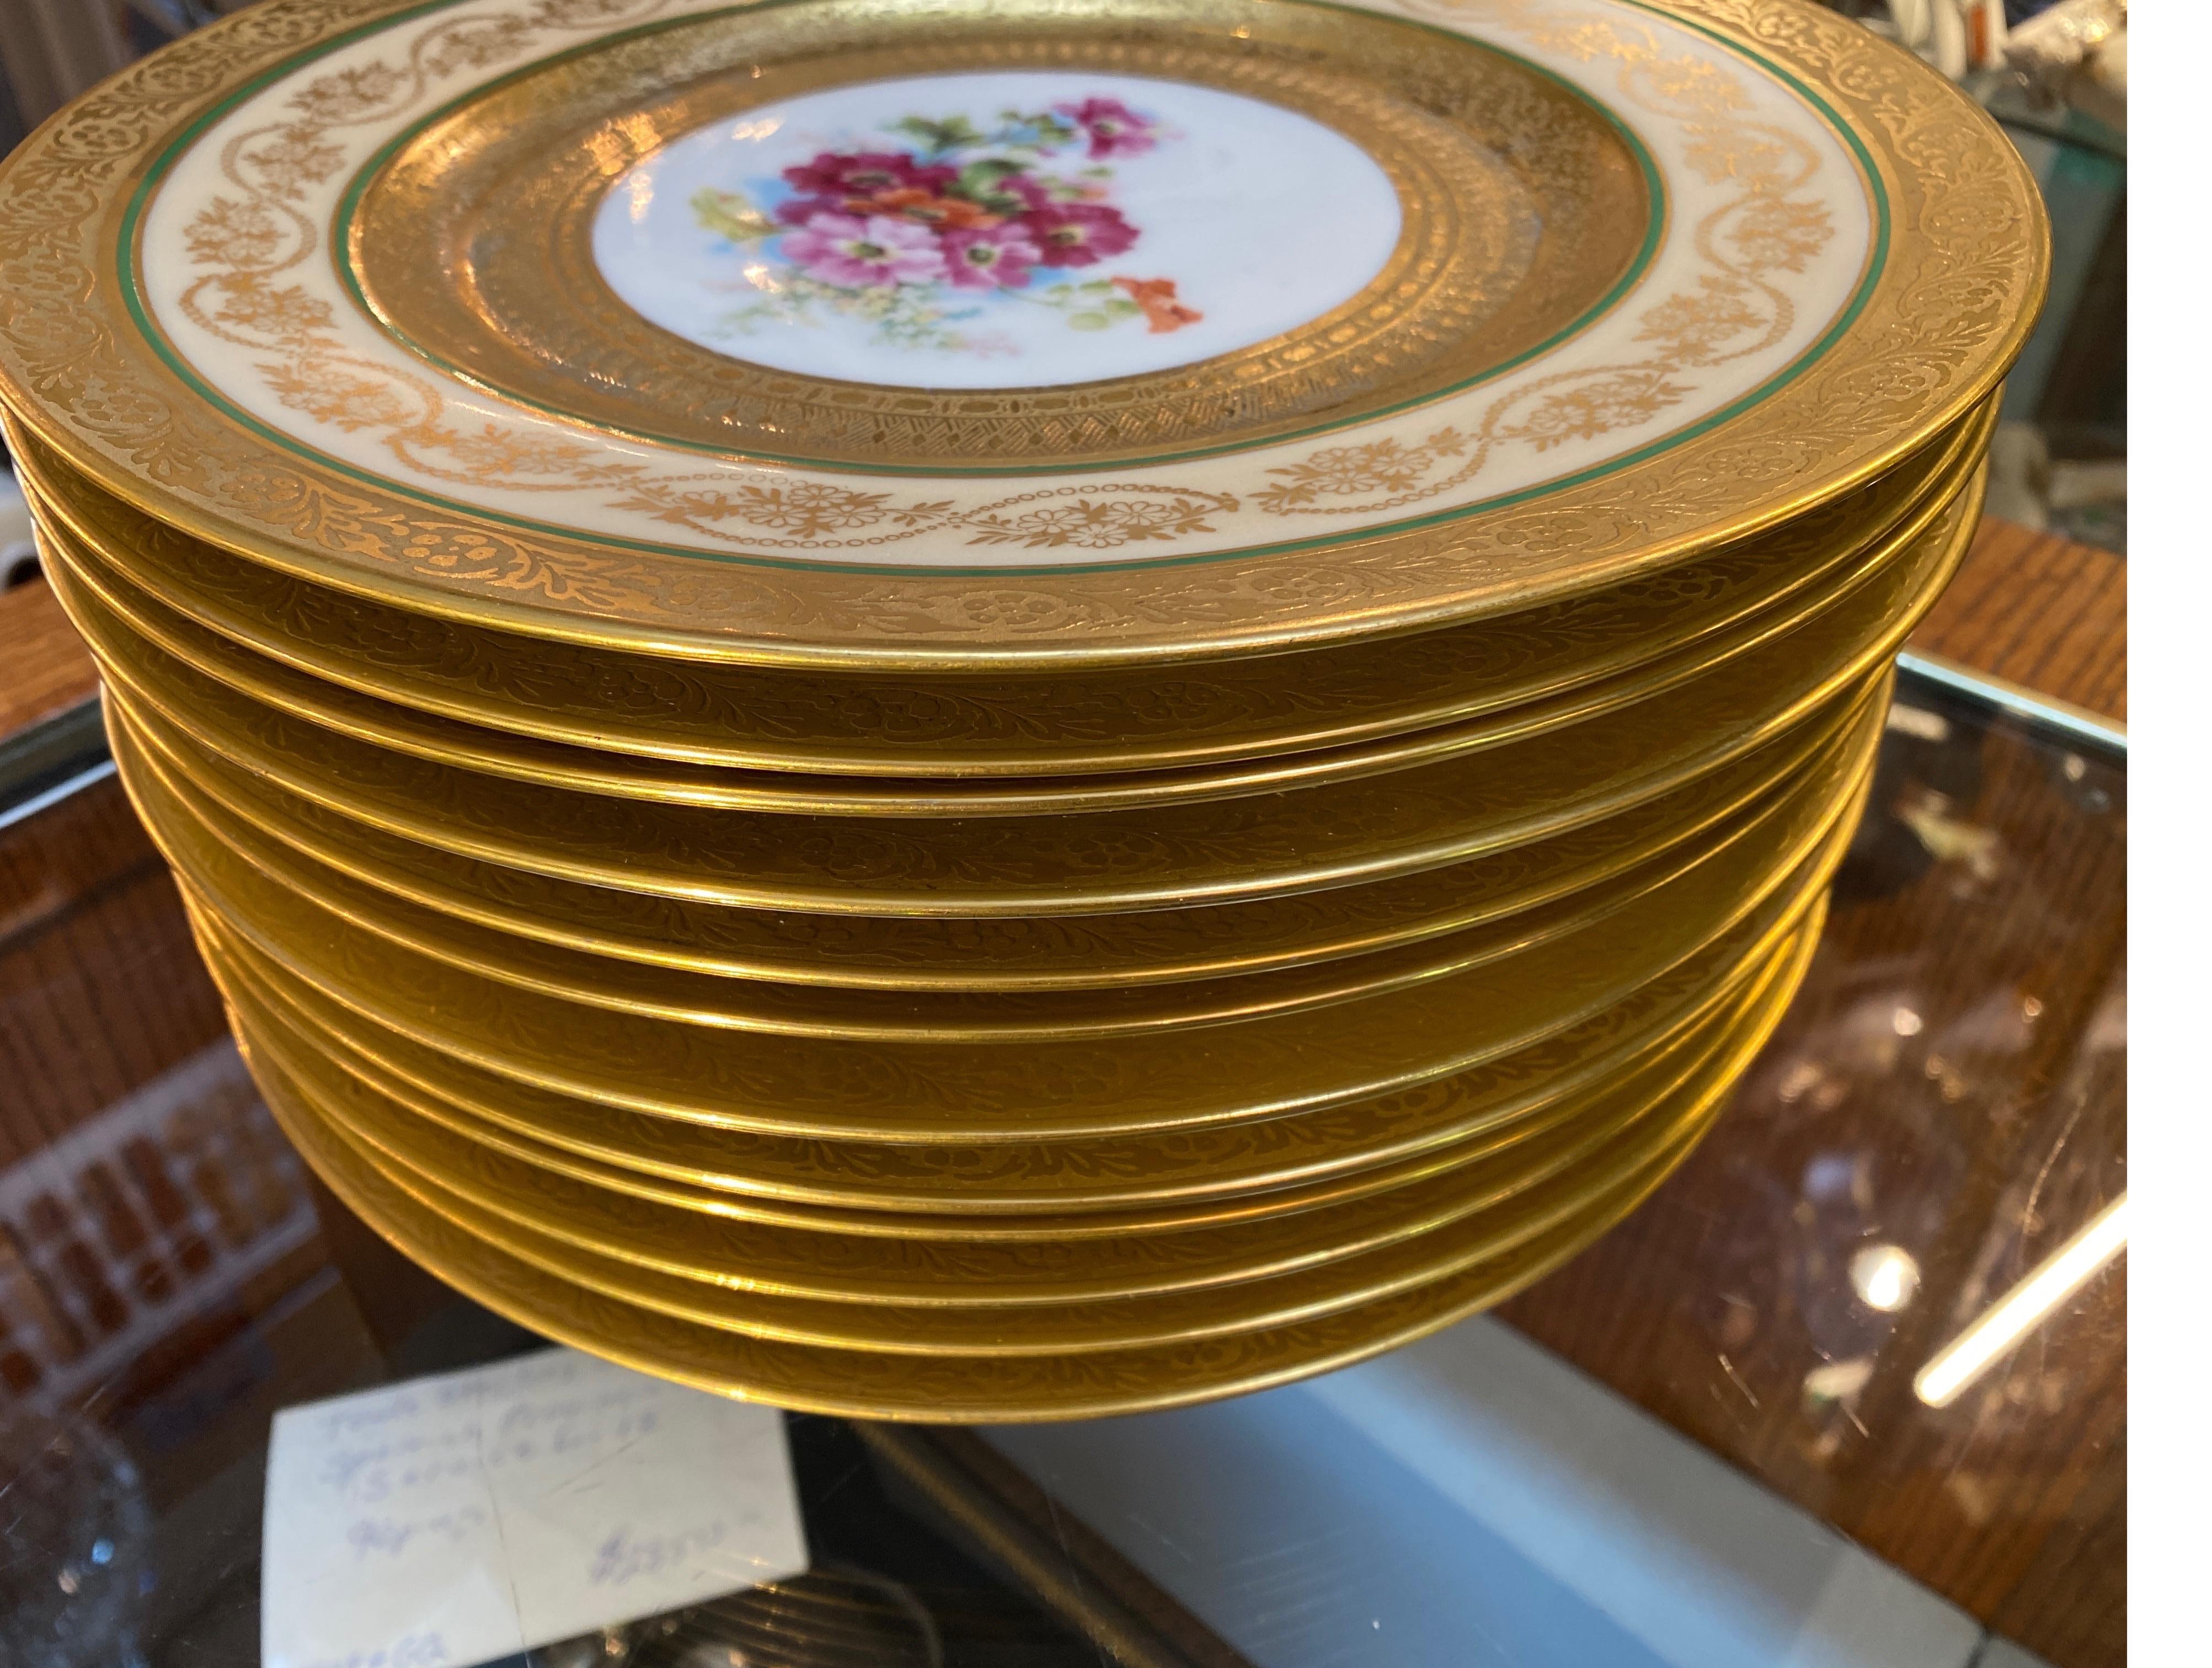 Set of 12 Gold Encrusted Floral Service Dinner Plates, 1920's Germany For Sale 2